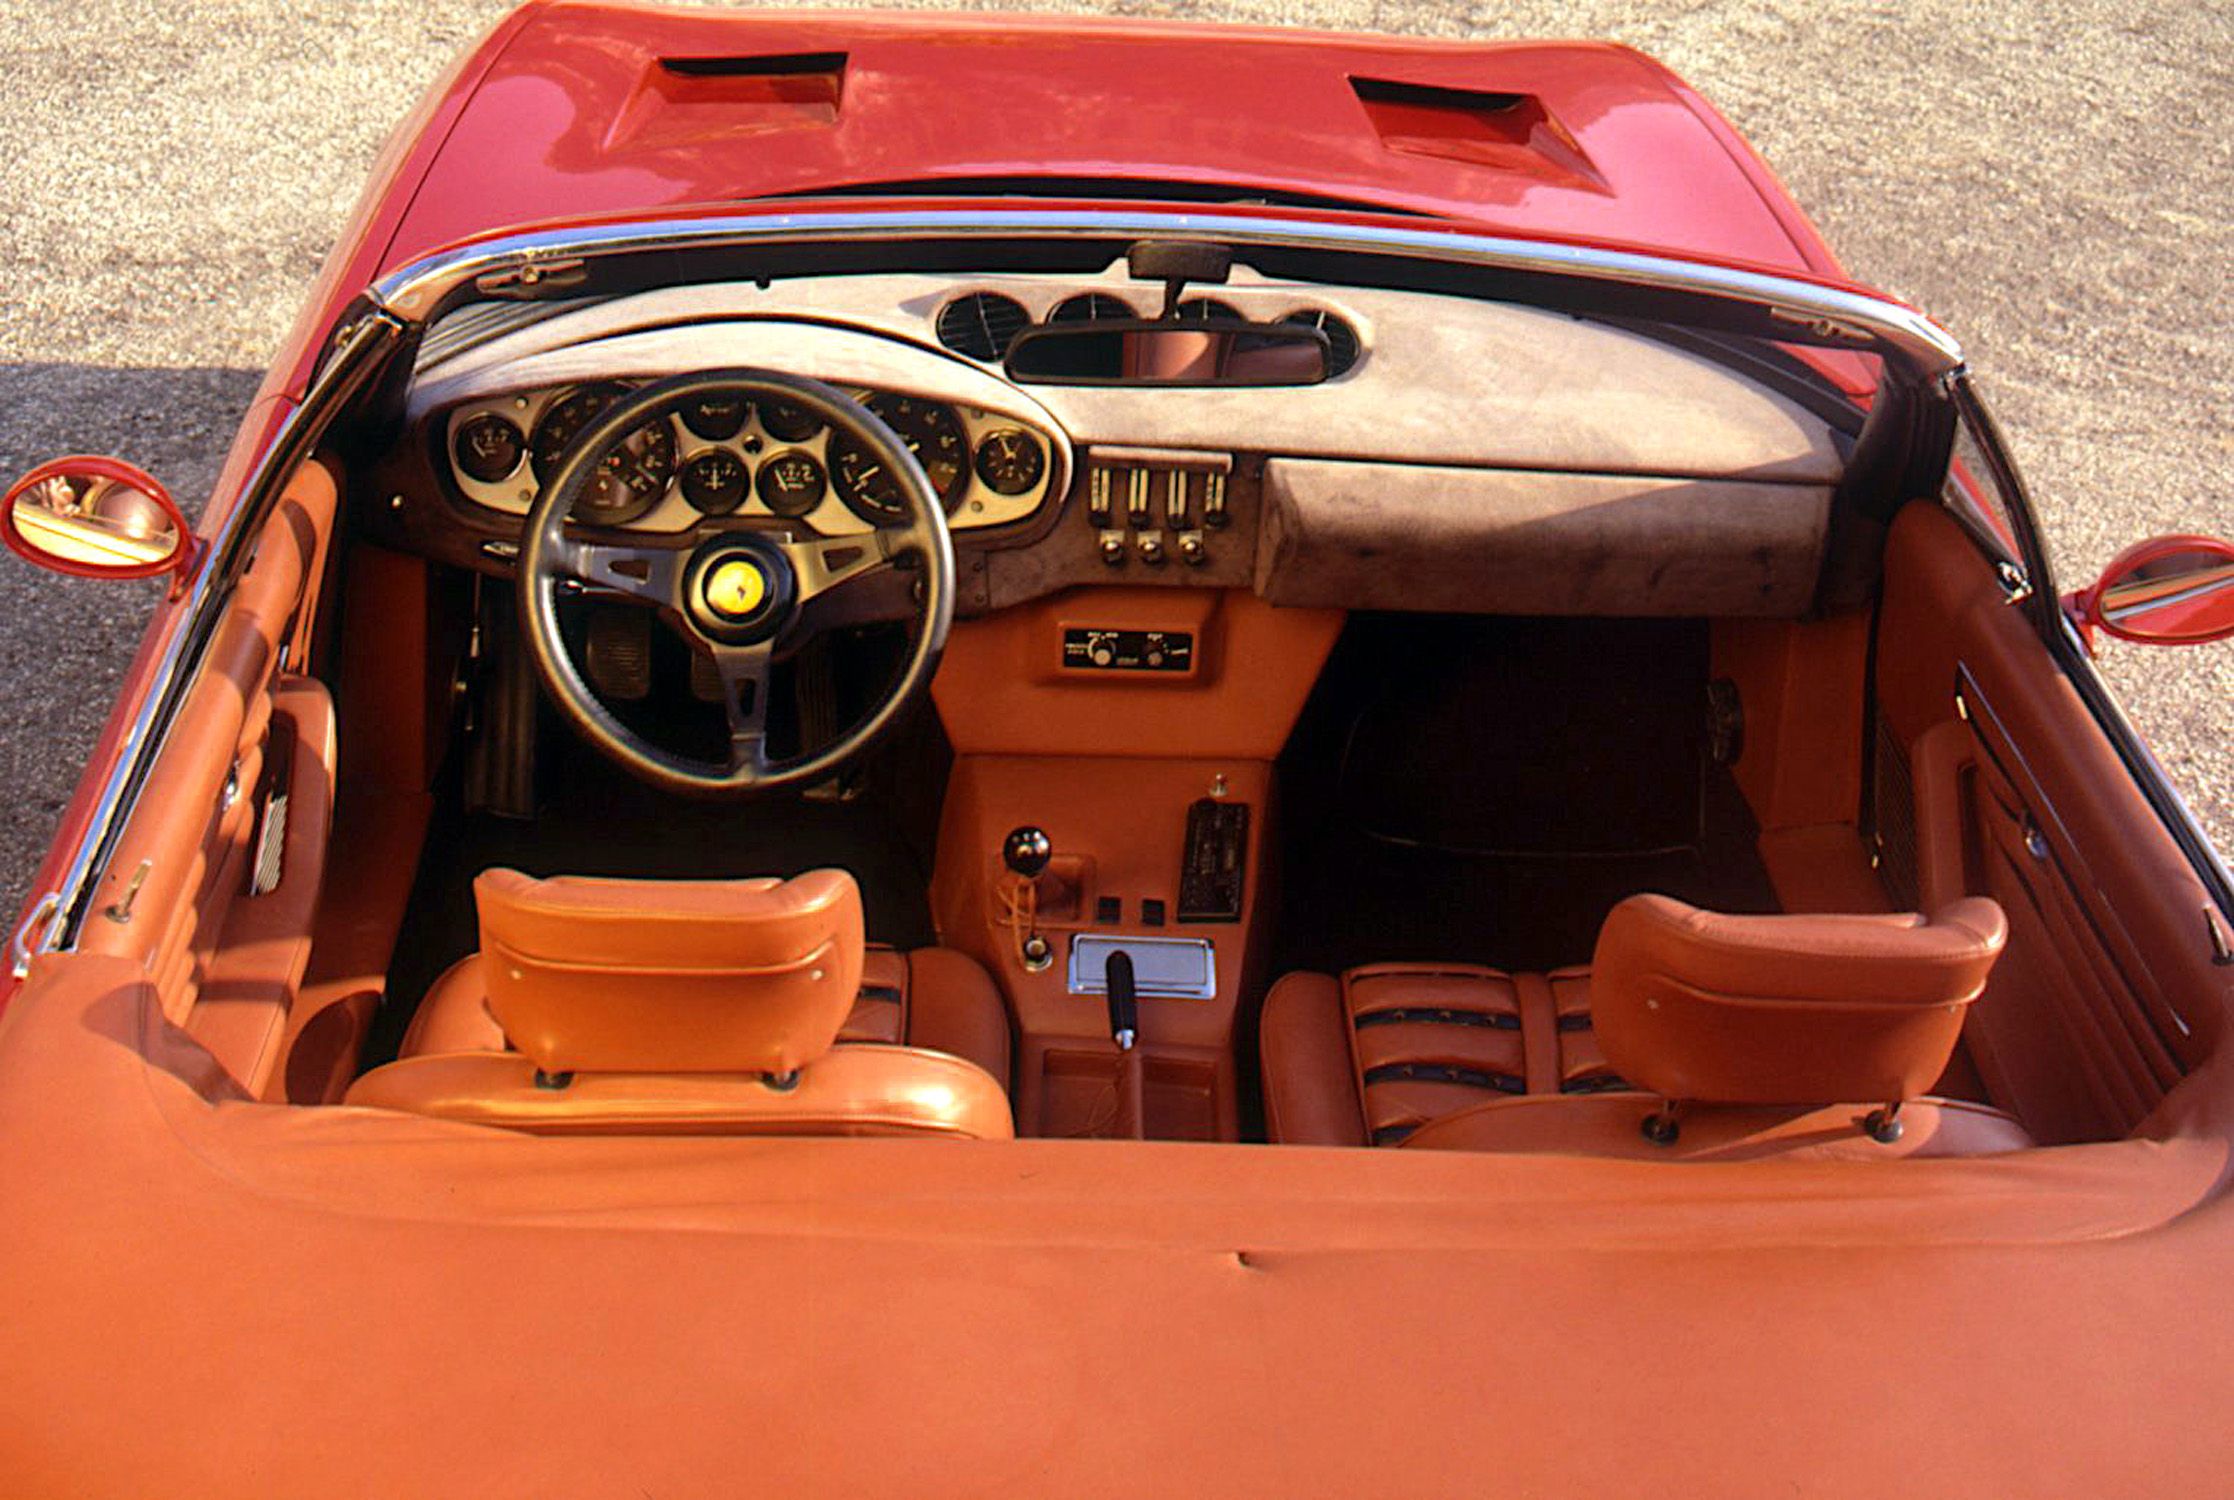 View Photos of the 1993 Ferrari 348 Spider